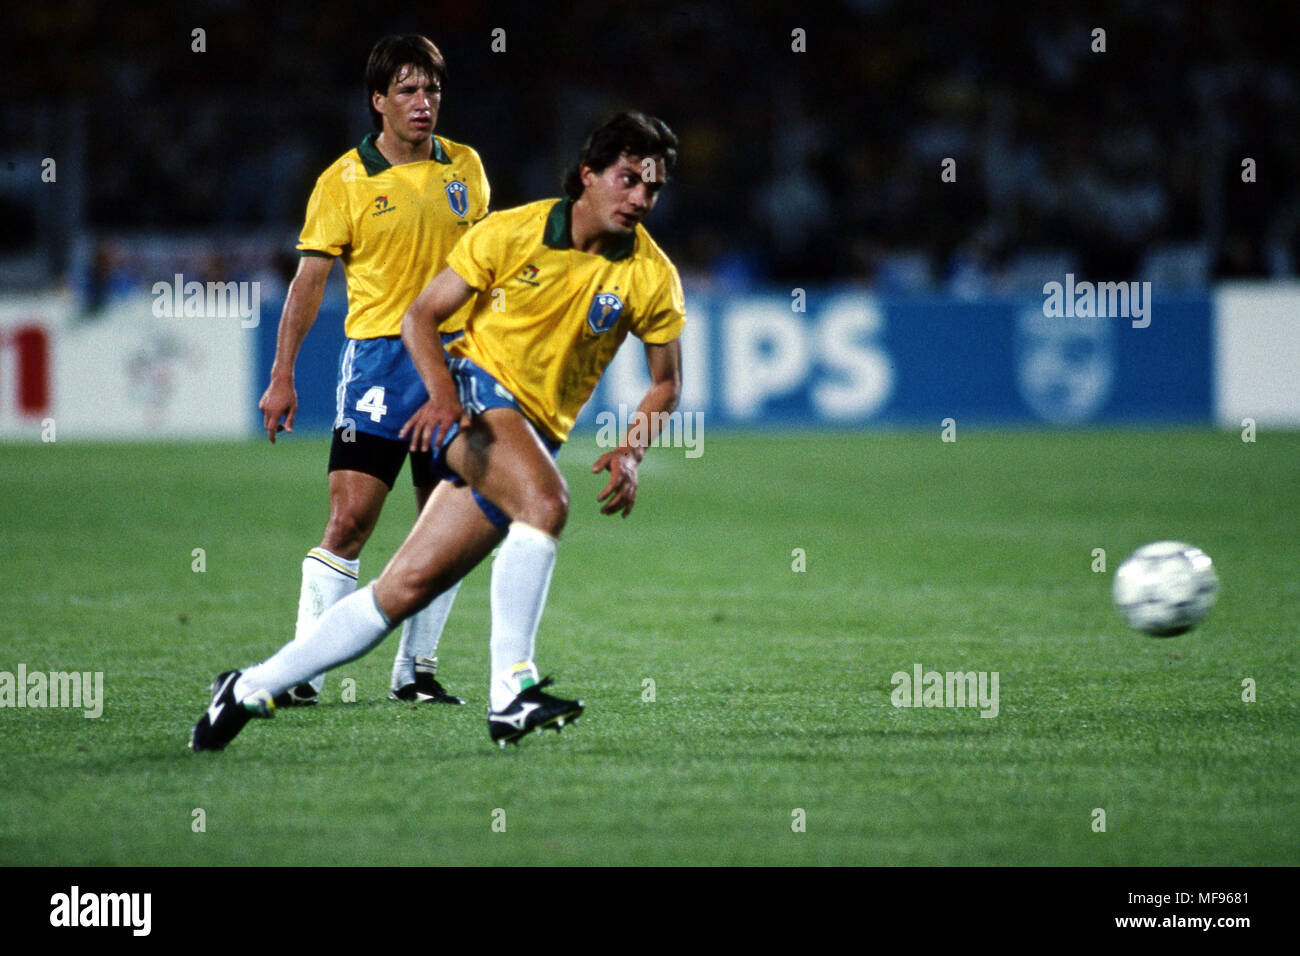 fifa-world-cup-italia-1990-1061990-stadio-delle-alpi-turin-italy-brazil-v-sweden-branco-dunga-brazil-full-name-cldio-ibrahim-vaz-leal-full-name-carlos-caetano-bledorn-verri-MF9681.jpg